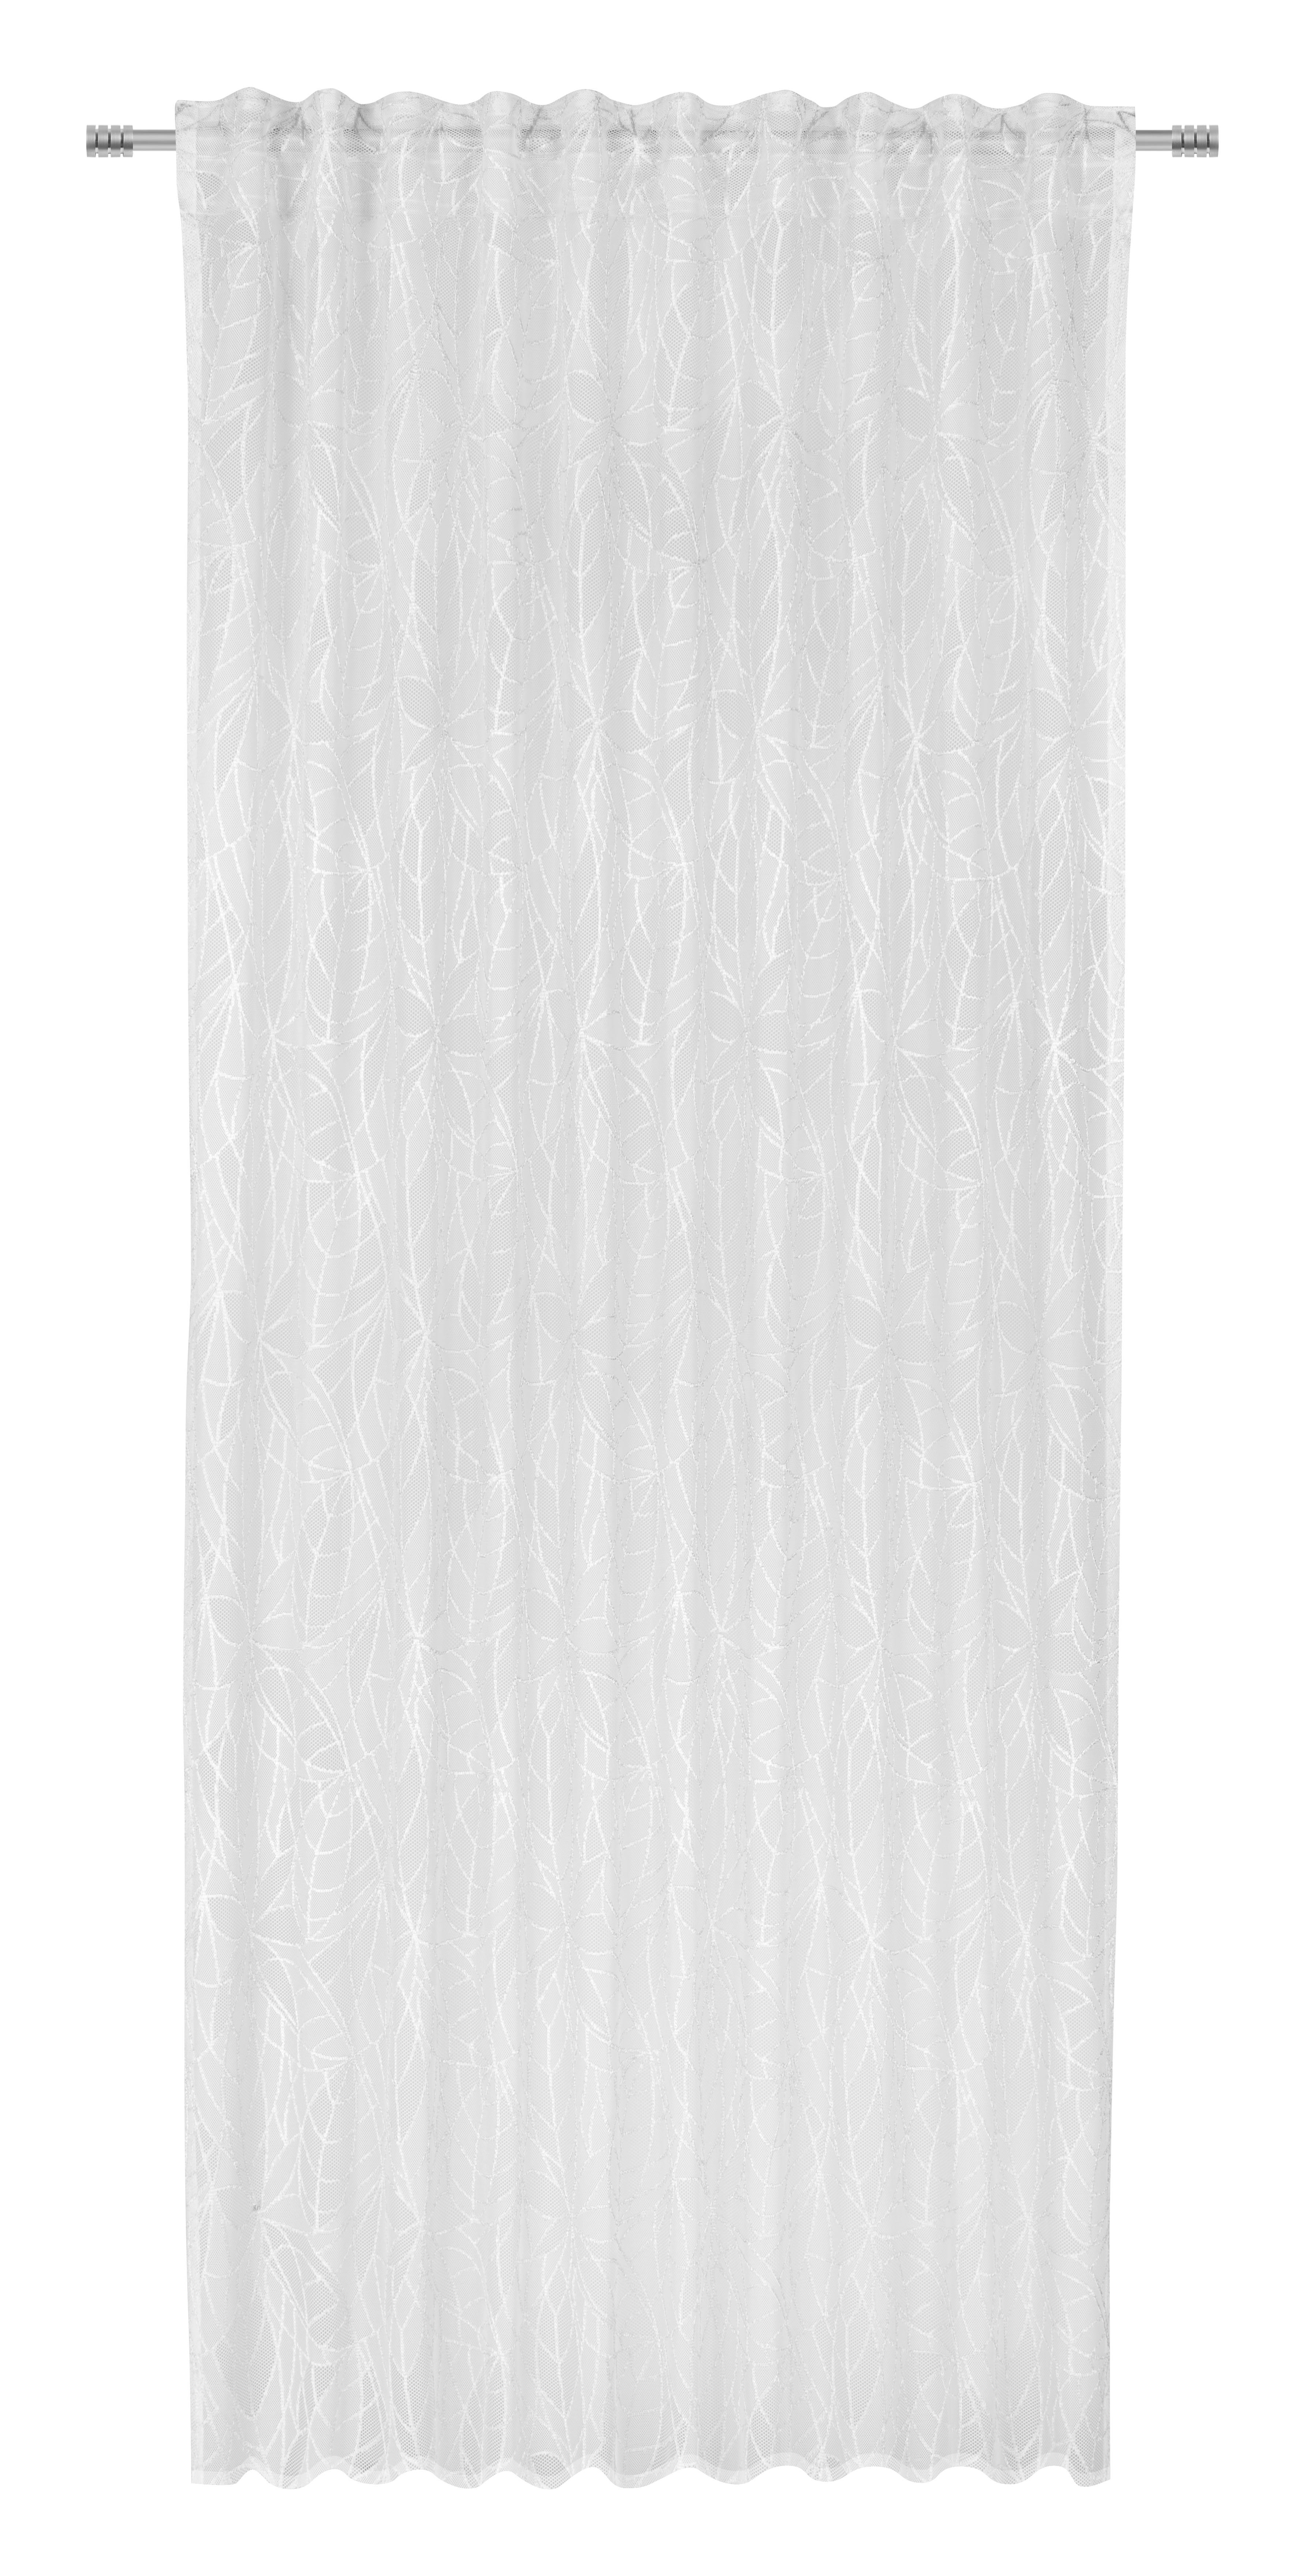 Fertigvorhang Carla in Weiß ca. 140x245cm - Weiß, KONVENTIONELL, Textil (140/245cm) - Modern Living